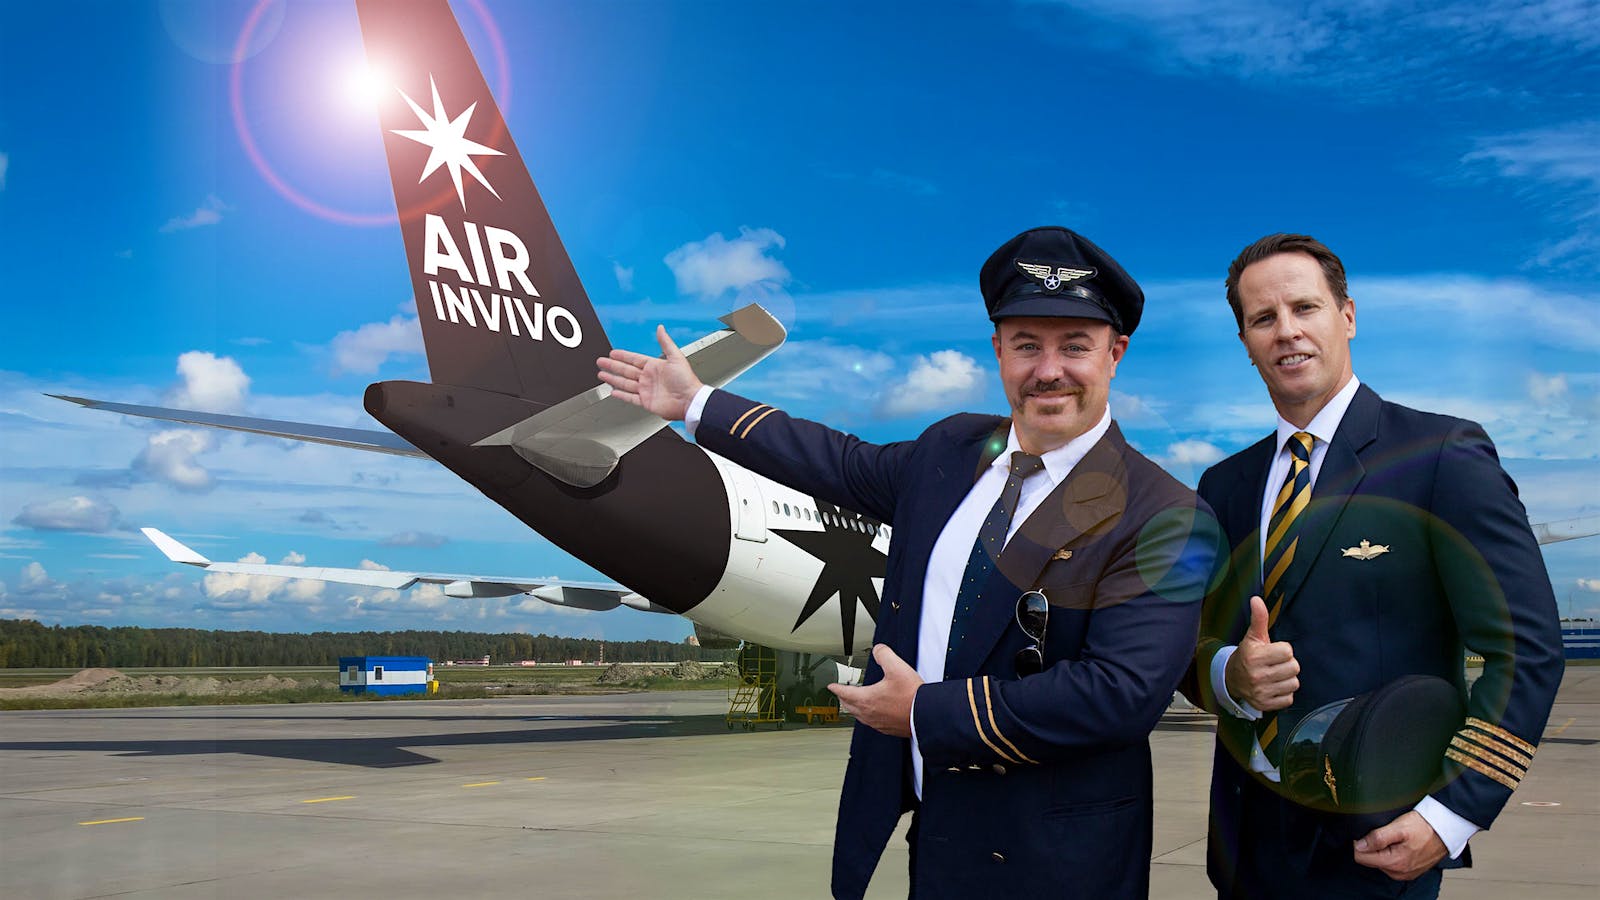 Can Kiwis Fly? New Zealand's Invivo Air Prepares to Take Flight